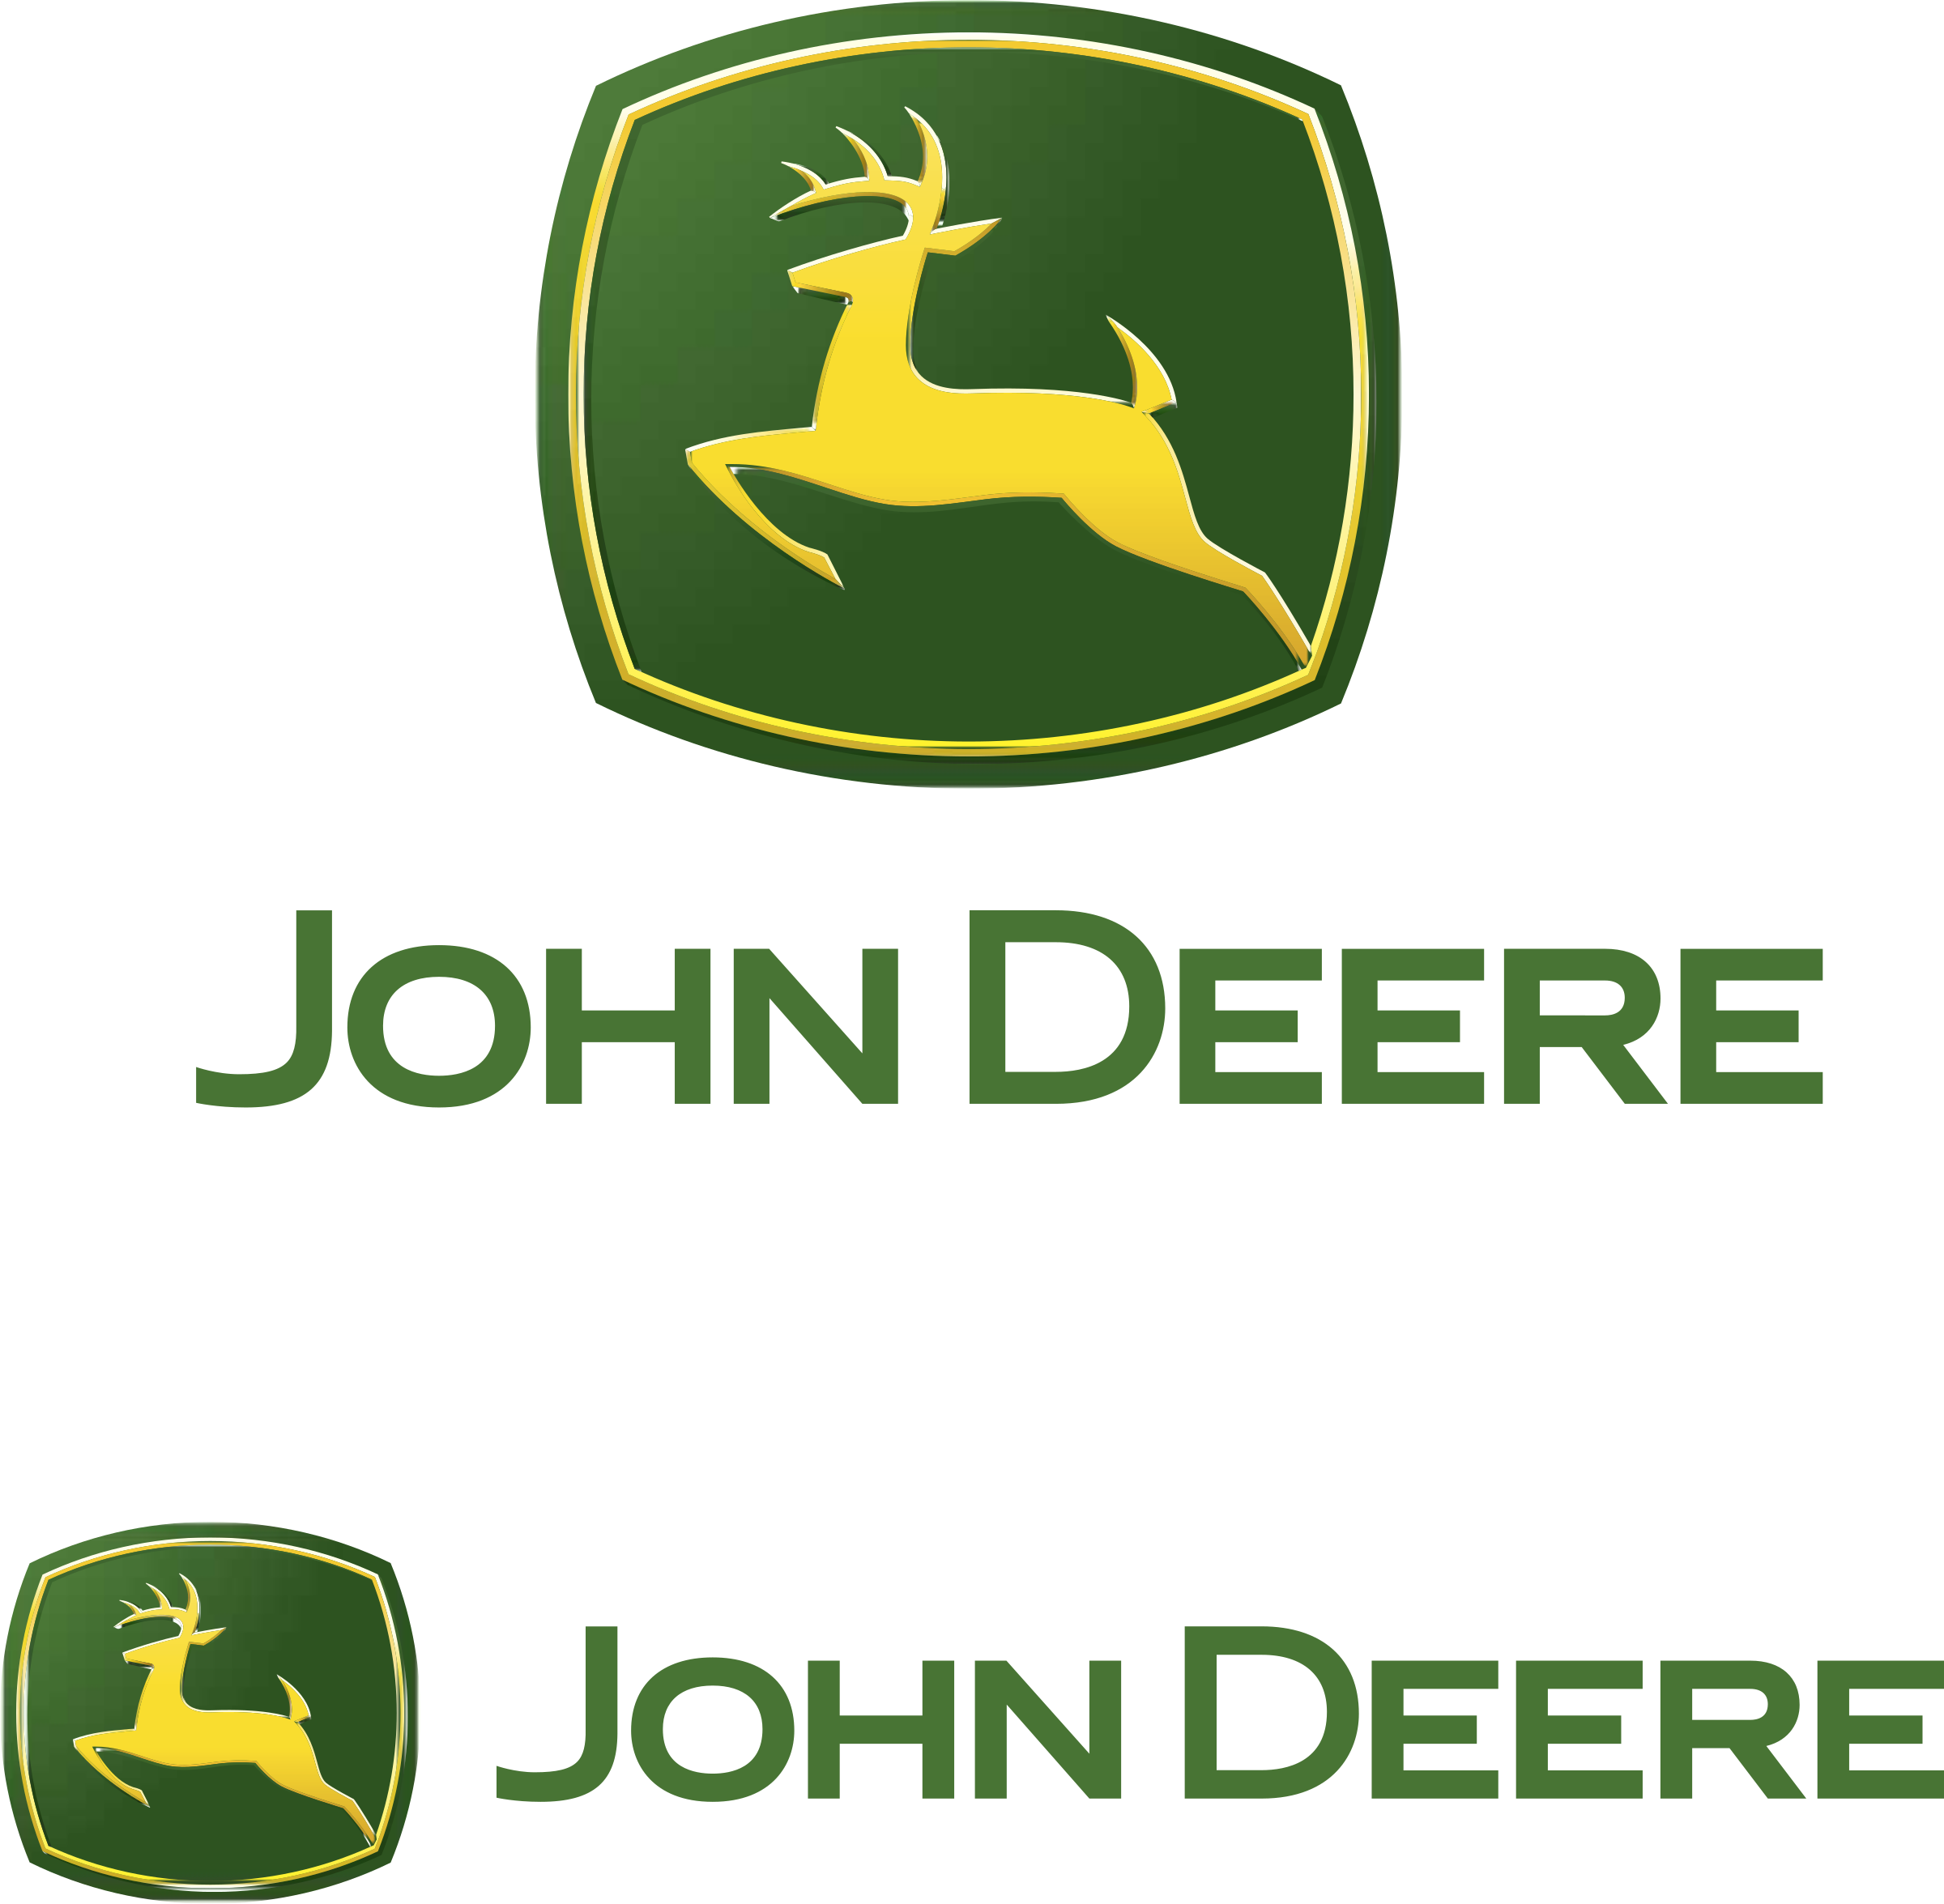 John Deere A History Of The T